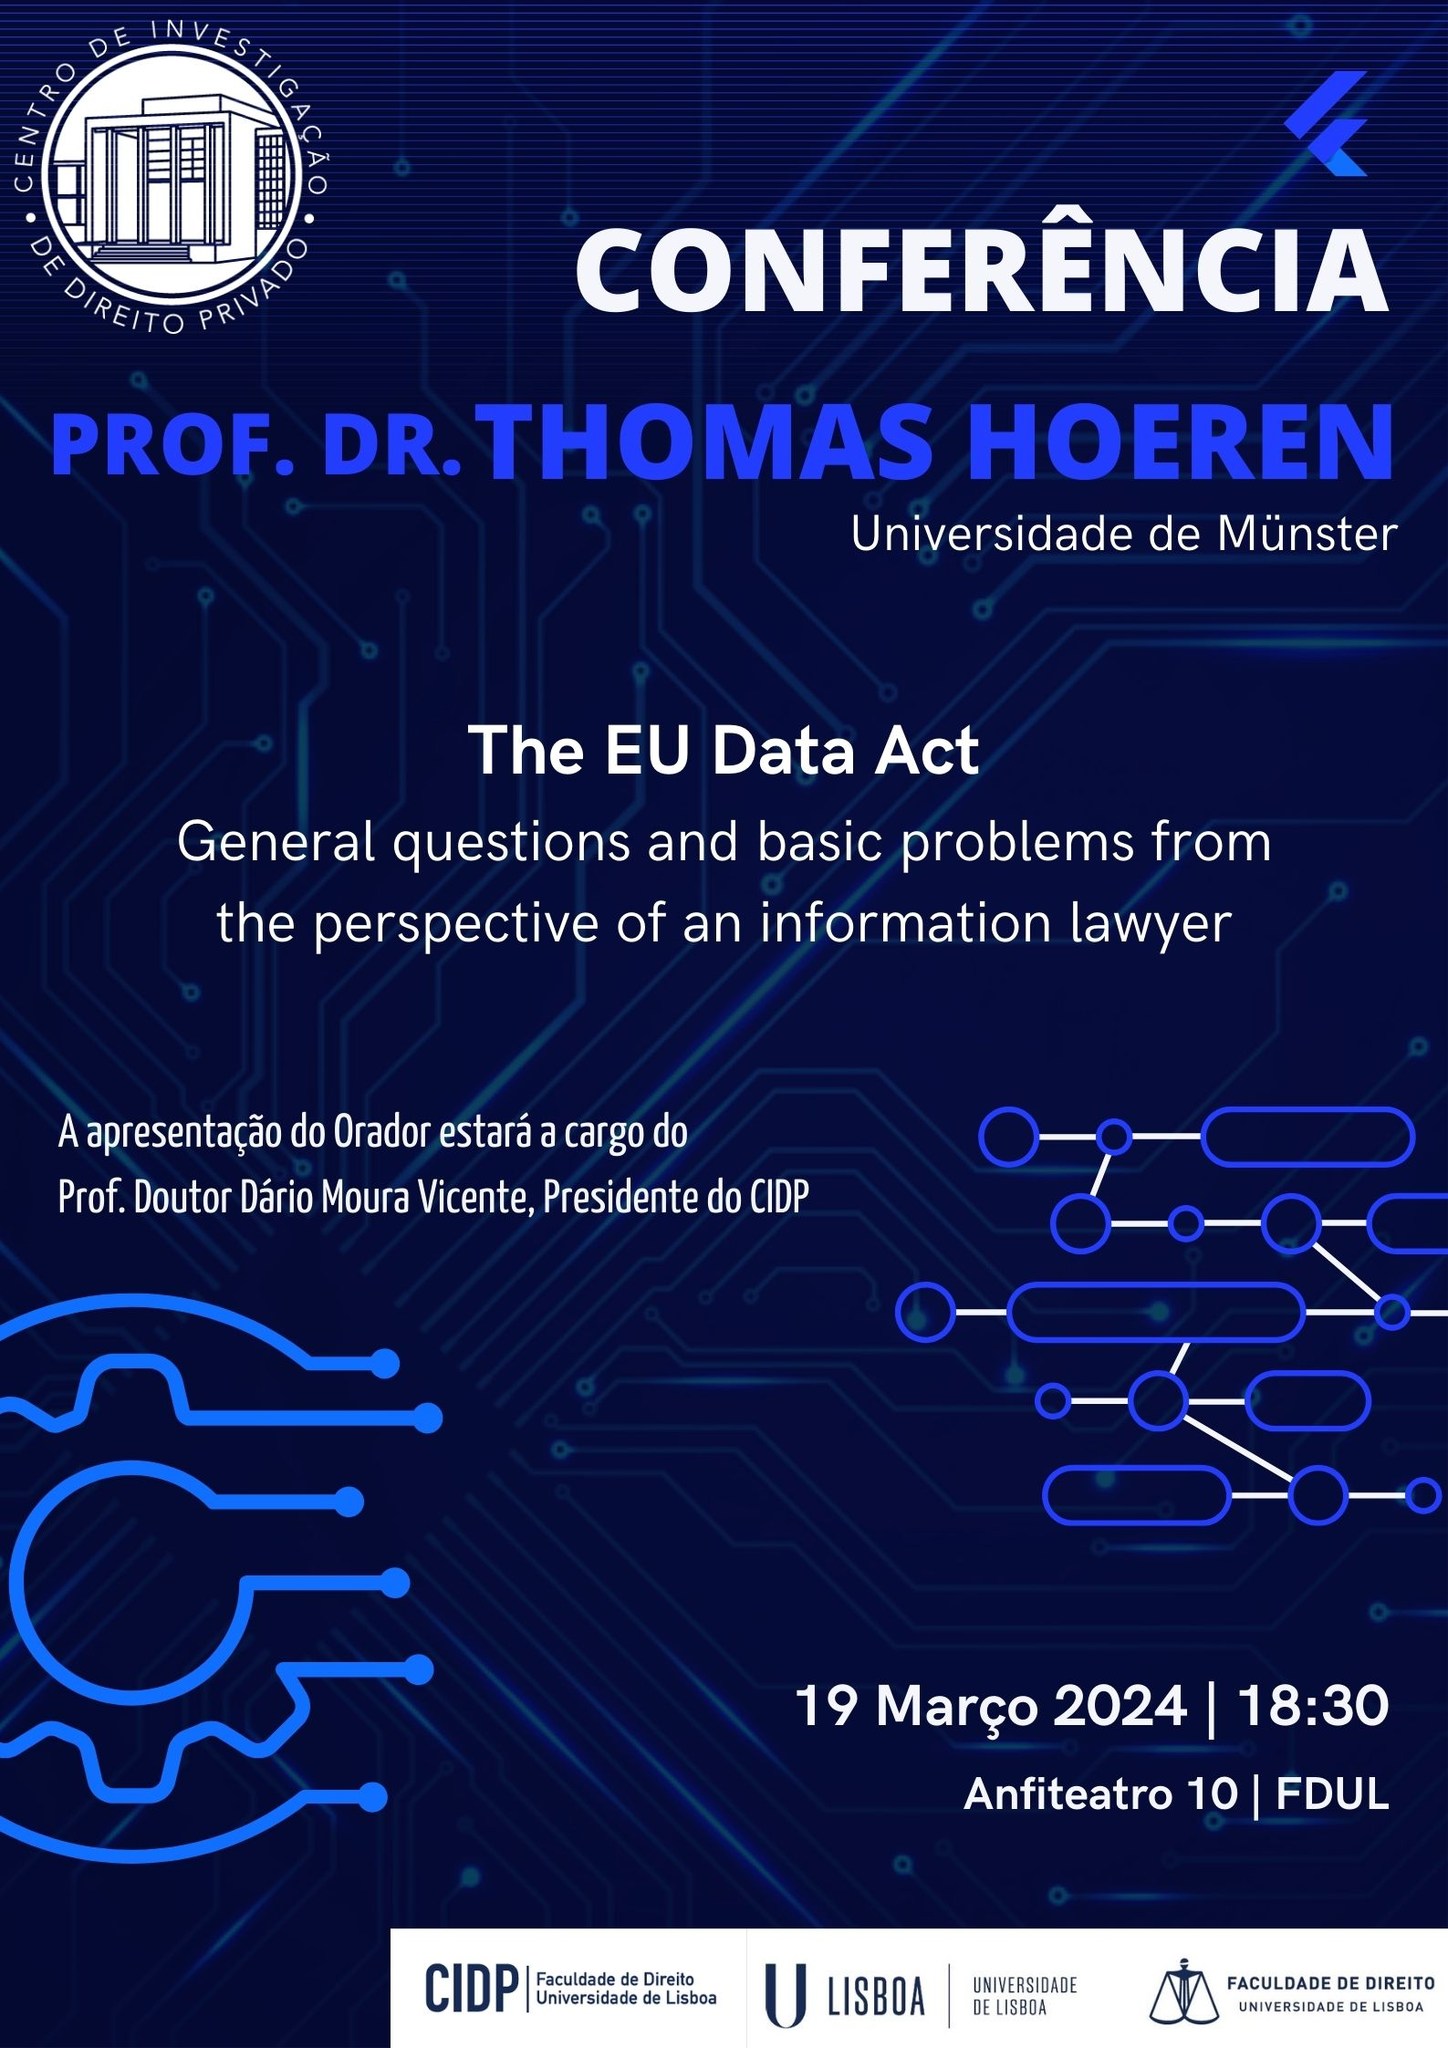 Conferência Prof. Dr. Thomas Hoeren “The EU Data Act” | CIDP-FDUL